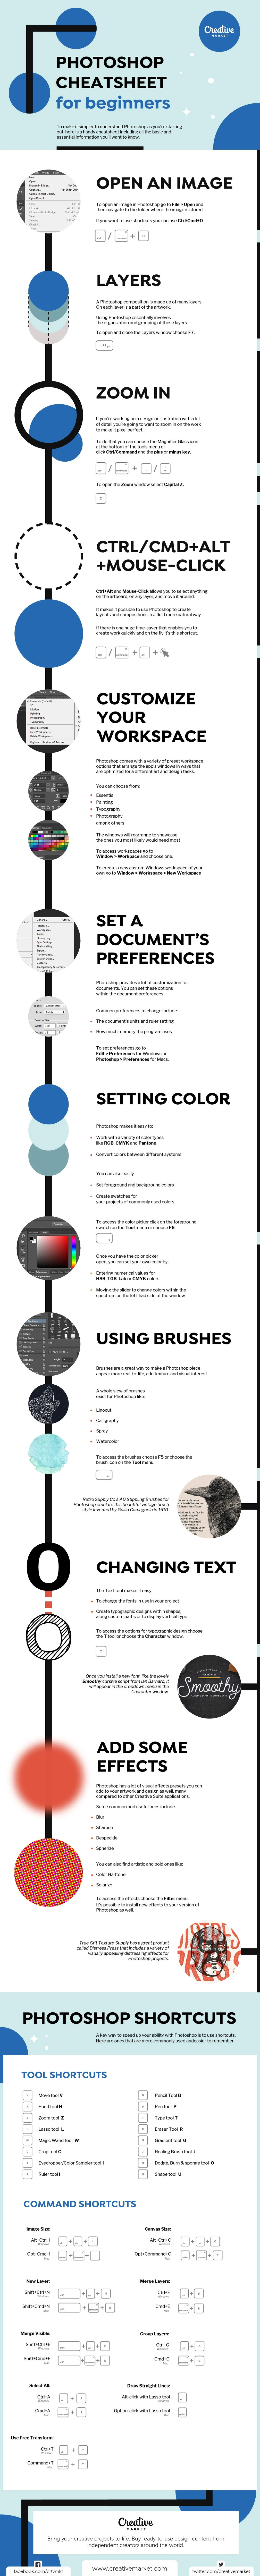 Photoshop Cheatsheet for Beginners - #infographic